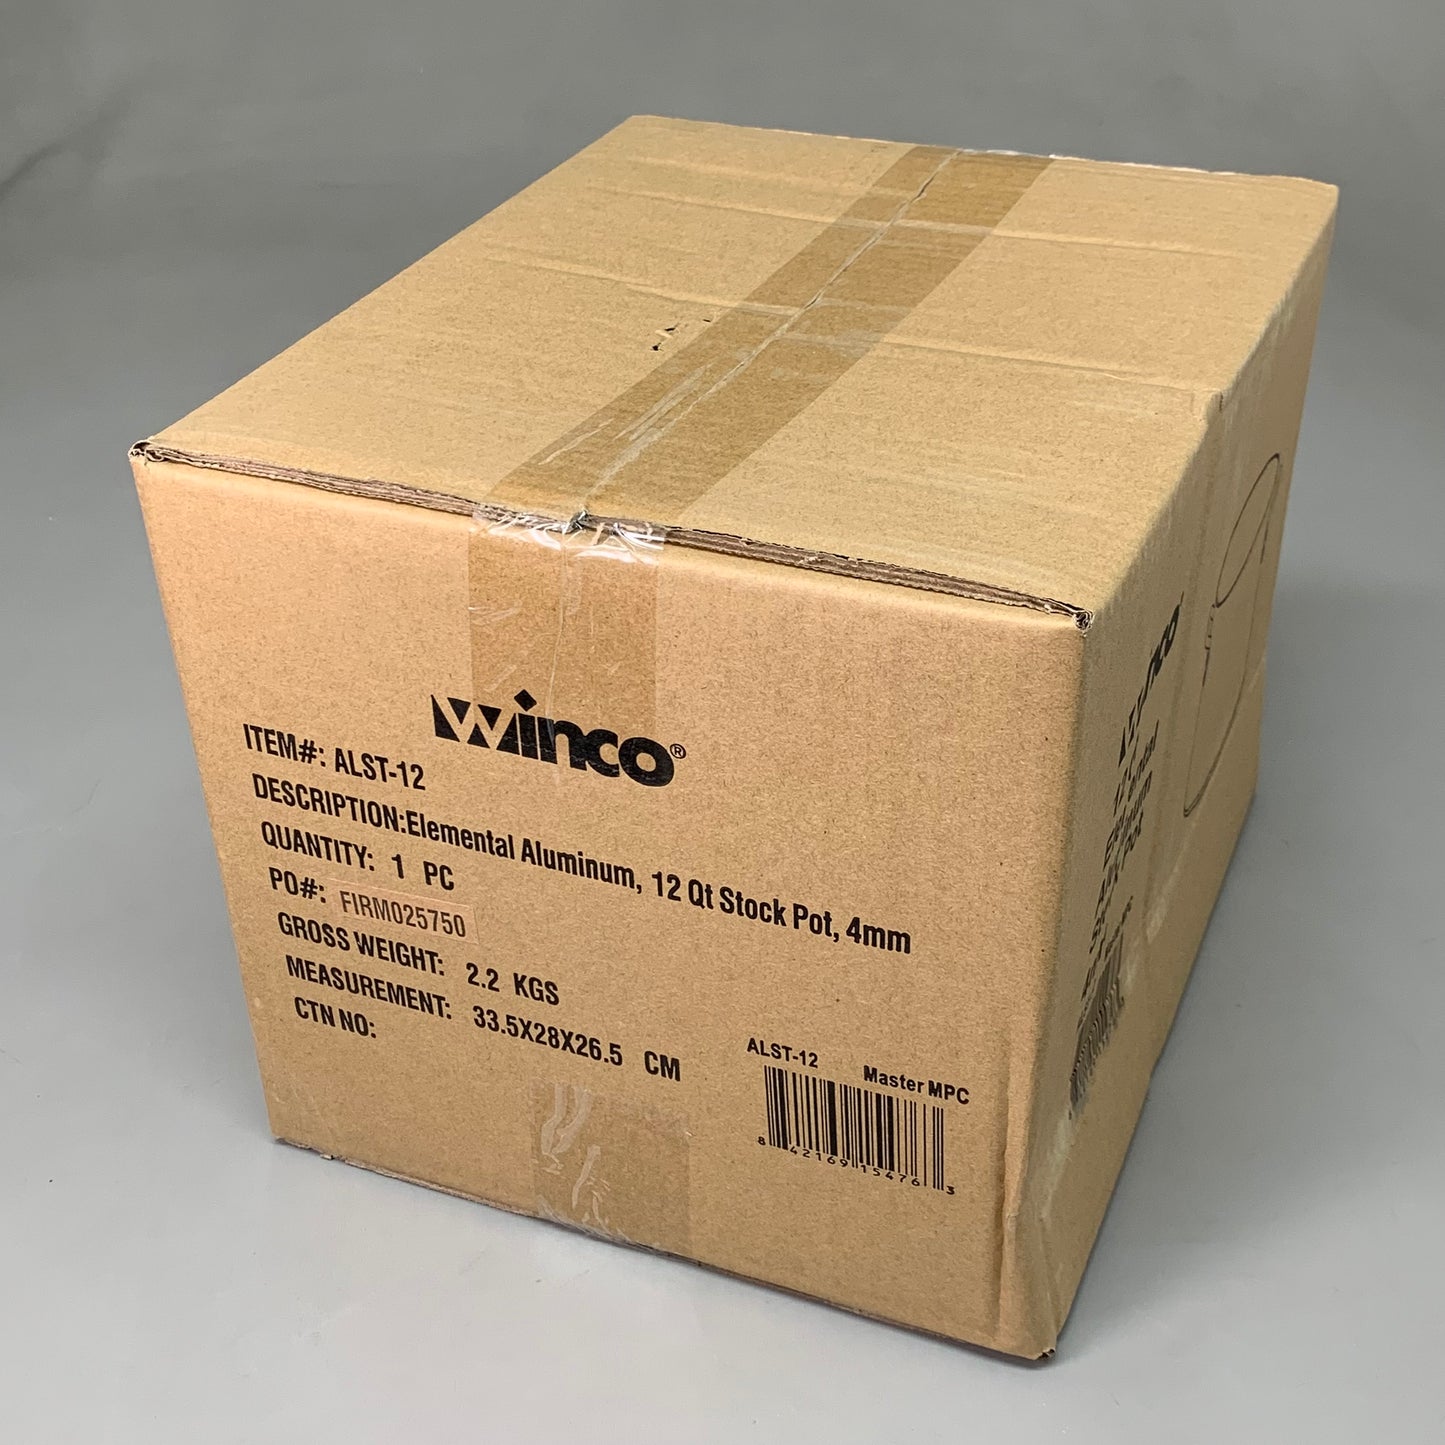 WINCO 12 Quart Stock Pot Elemental Aluminum ALST-12